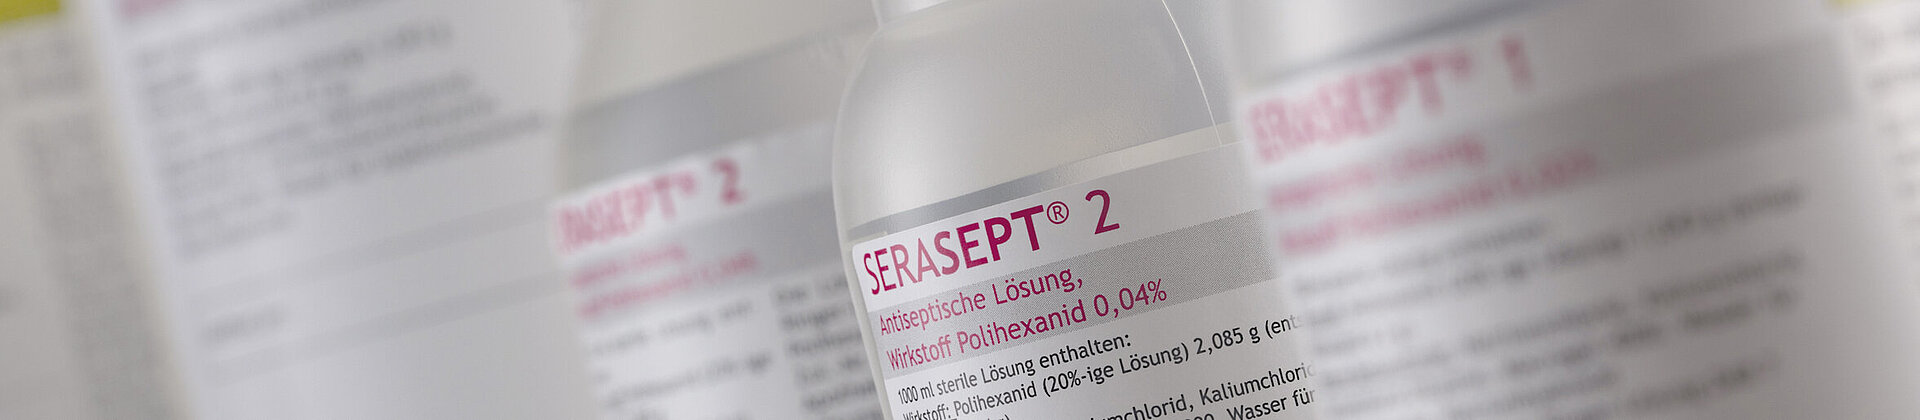 SERASEPT 1/2 - Antiseptikum